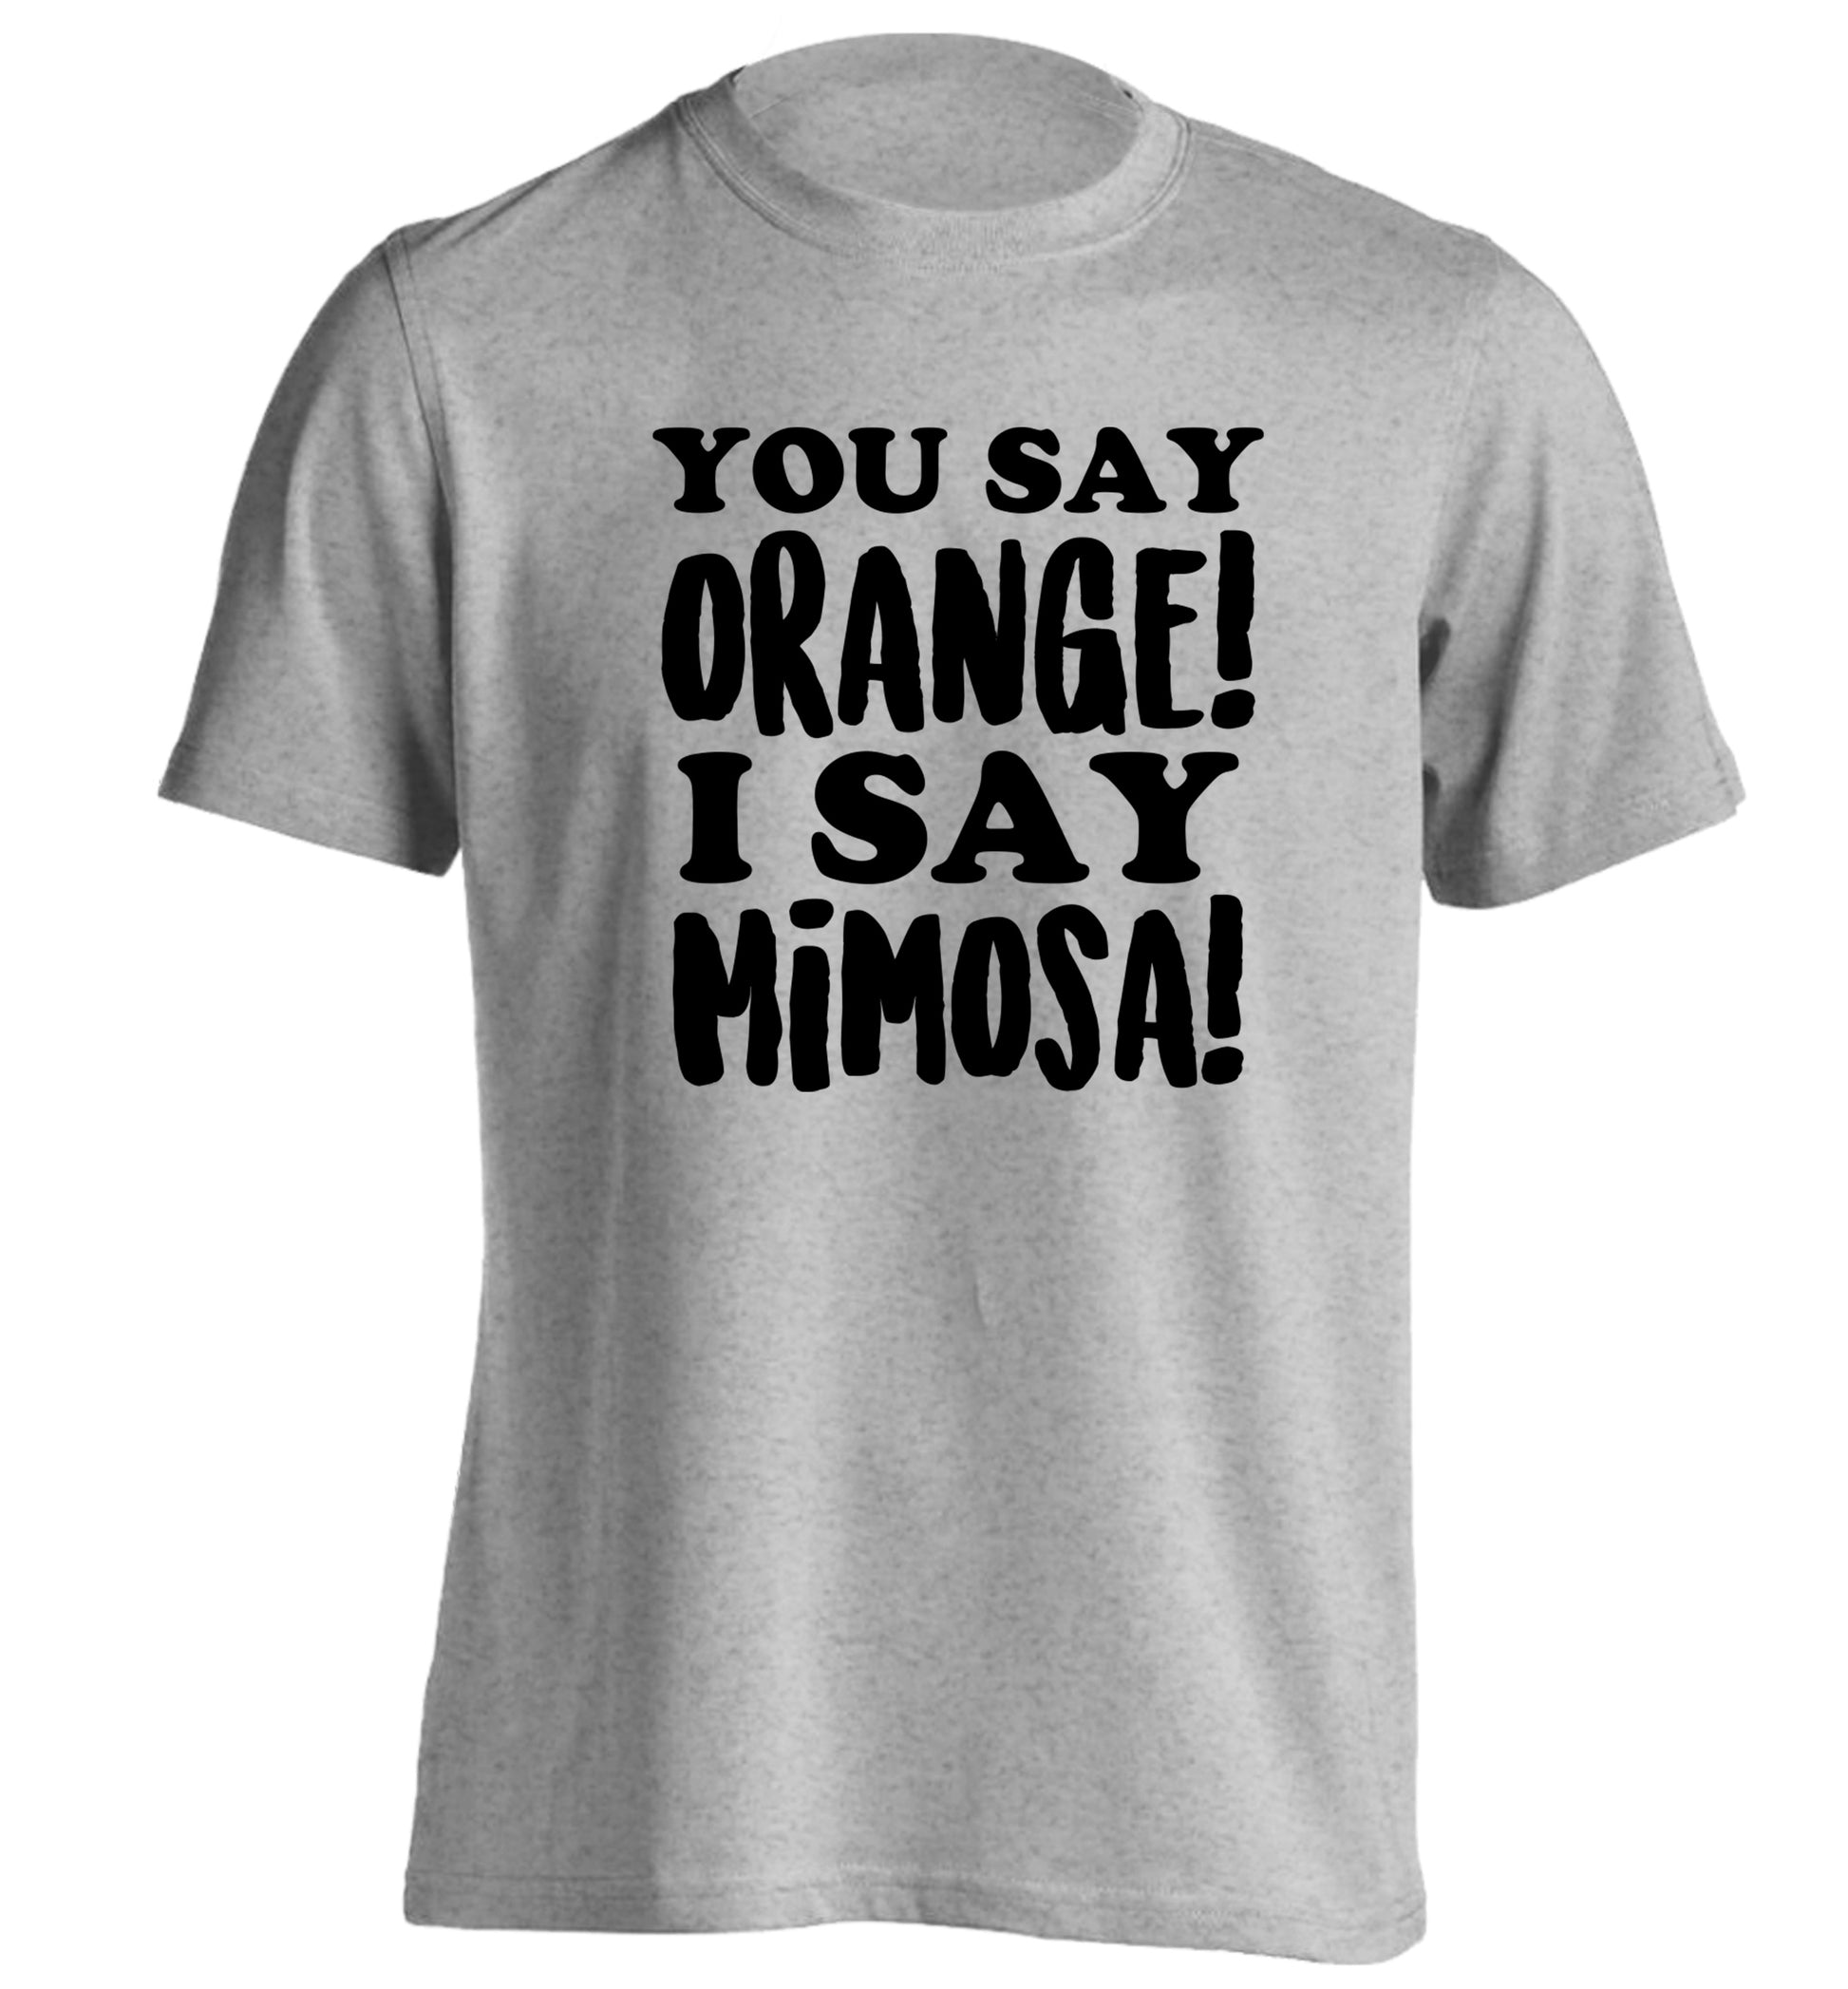 You say orange I say mimosa! adults unisex grey Tshirt 2XL